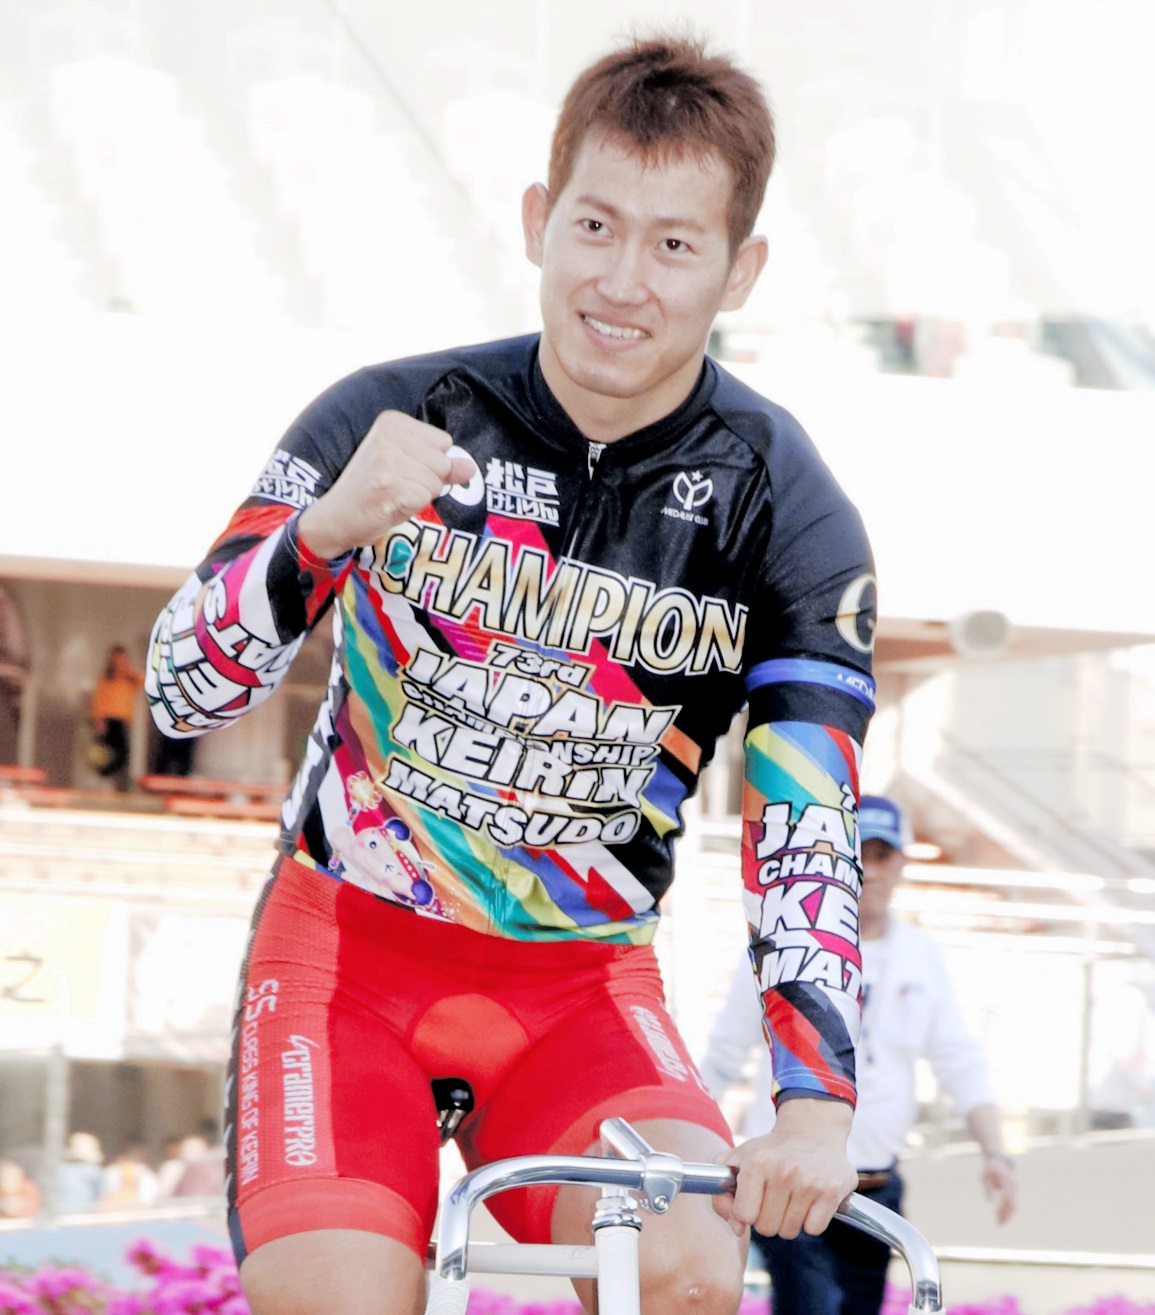 脇本雄太、日本選手権で完全優勝